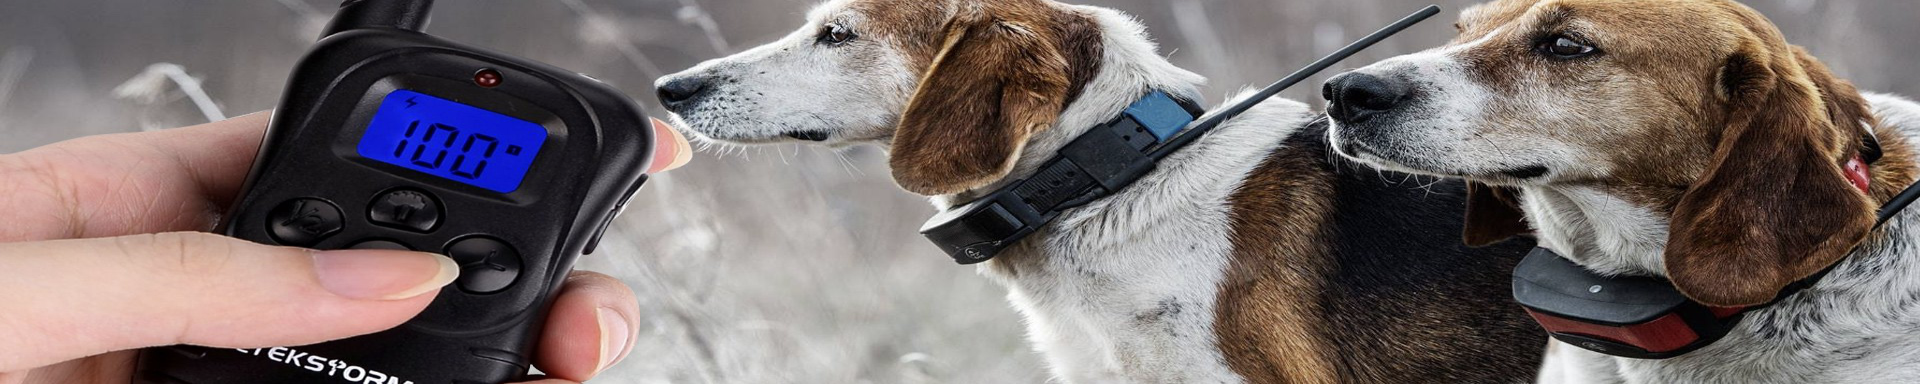 Dog Training & Tracking Devices | MunroKennels.com | Munro Industries mk-1009040807